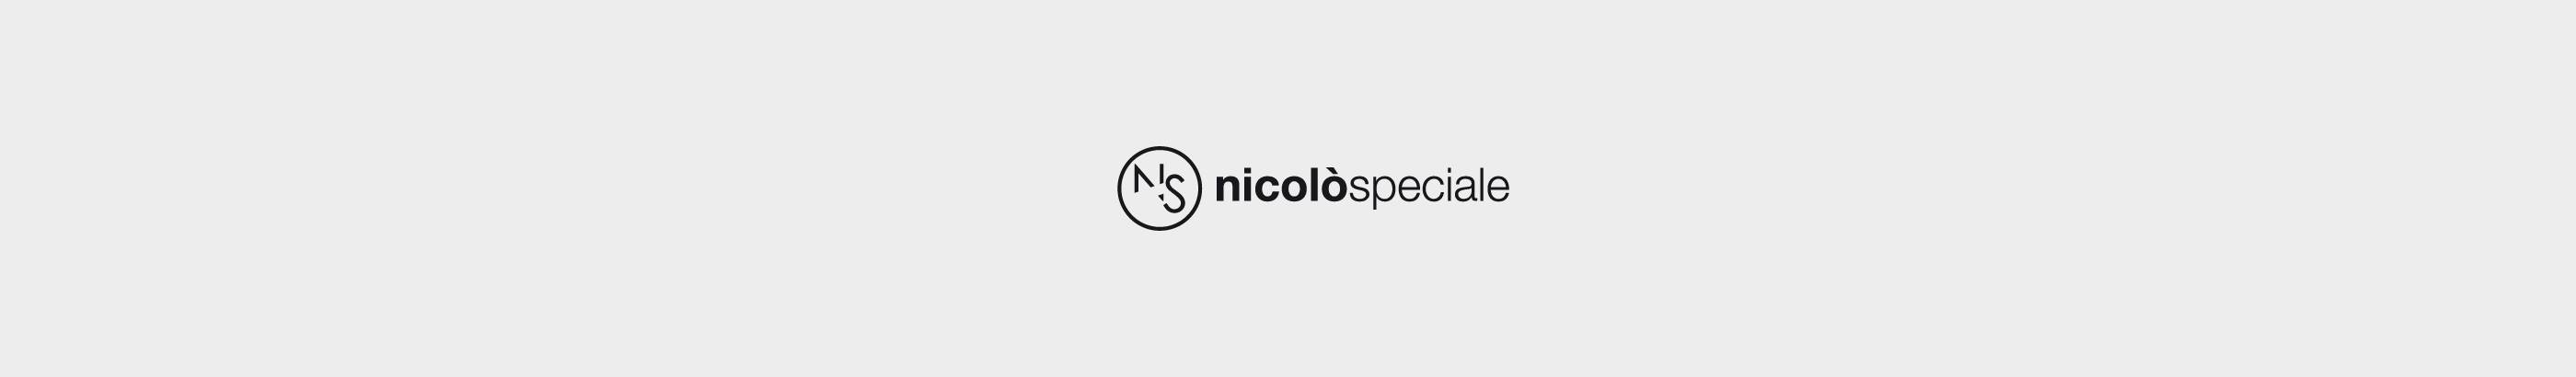 Nicolò Speciale's profile banner